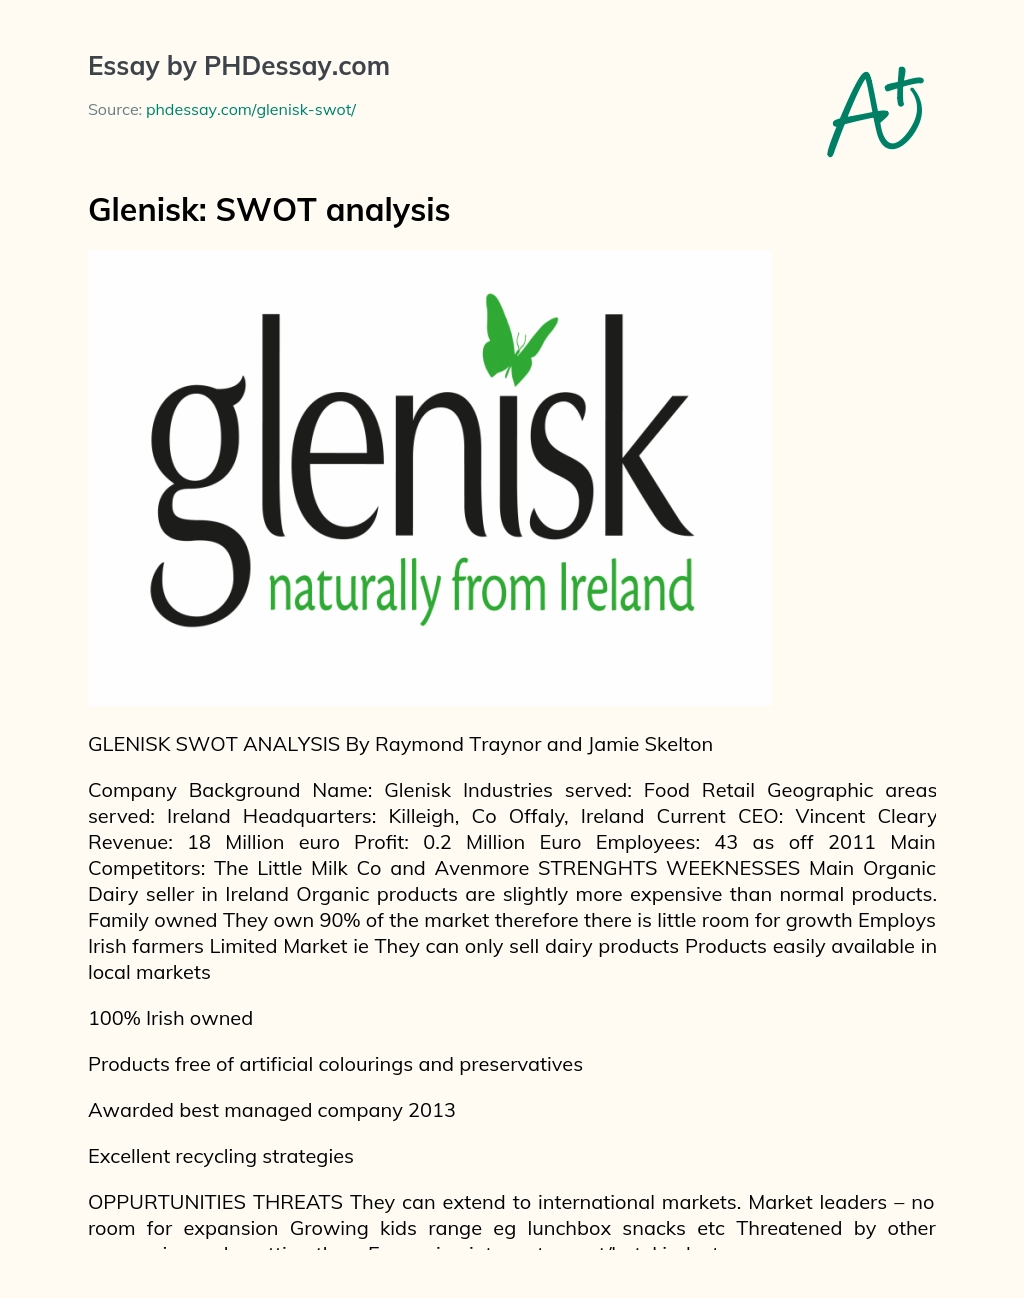 Glenisk: SWOT Analysis essay